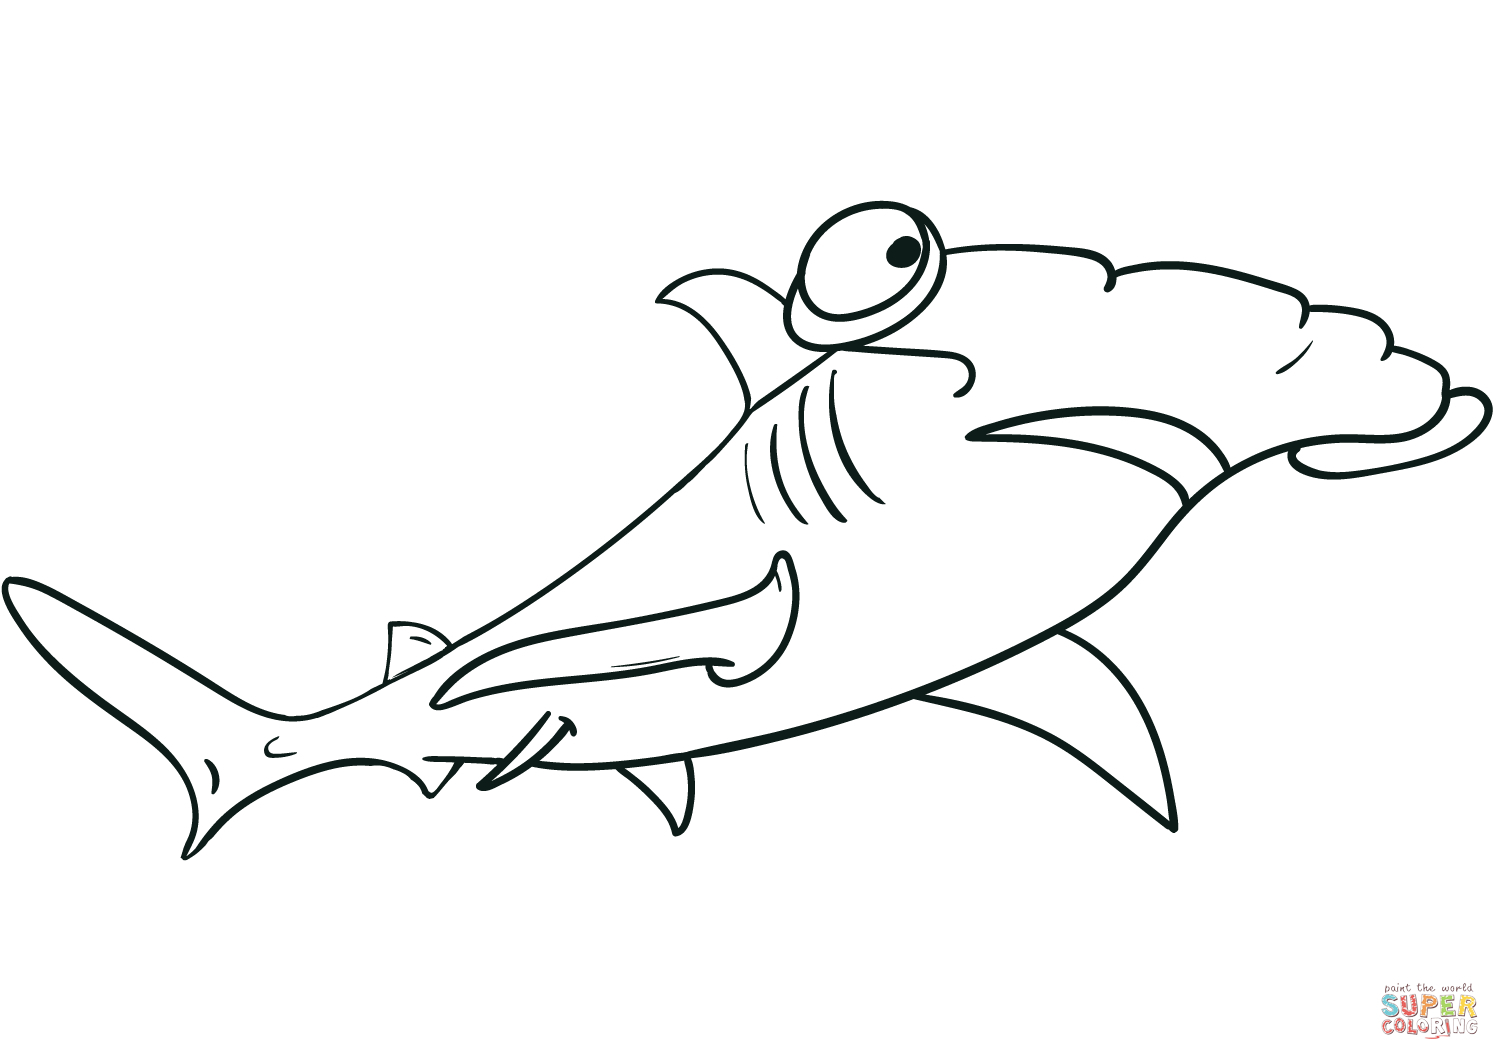 Coloriage Requin Blanc Imprimer - Primanyc dedans Coloriage Requin Blanc Imprimer